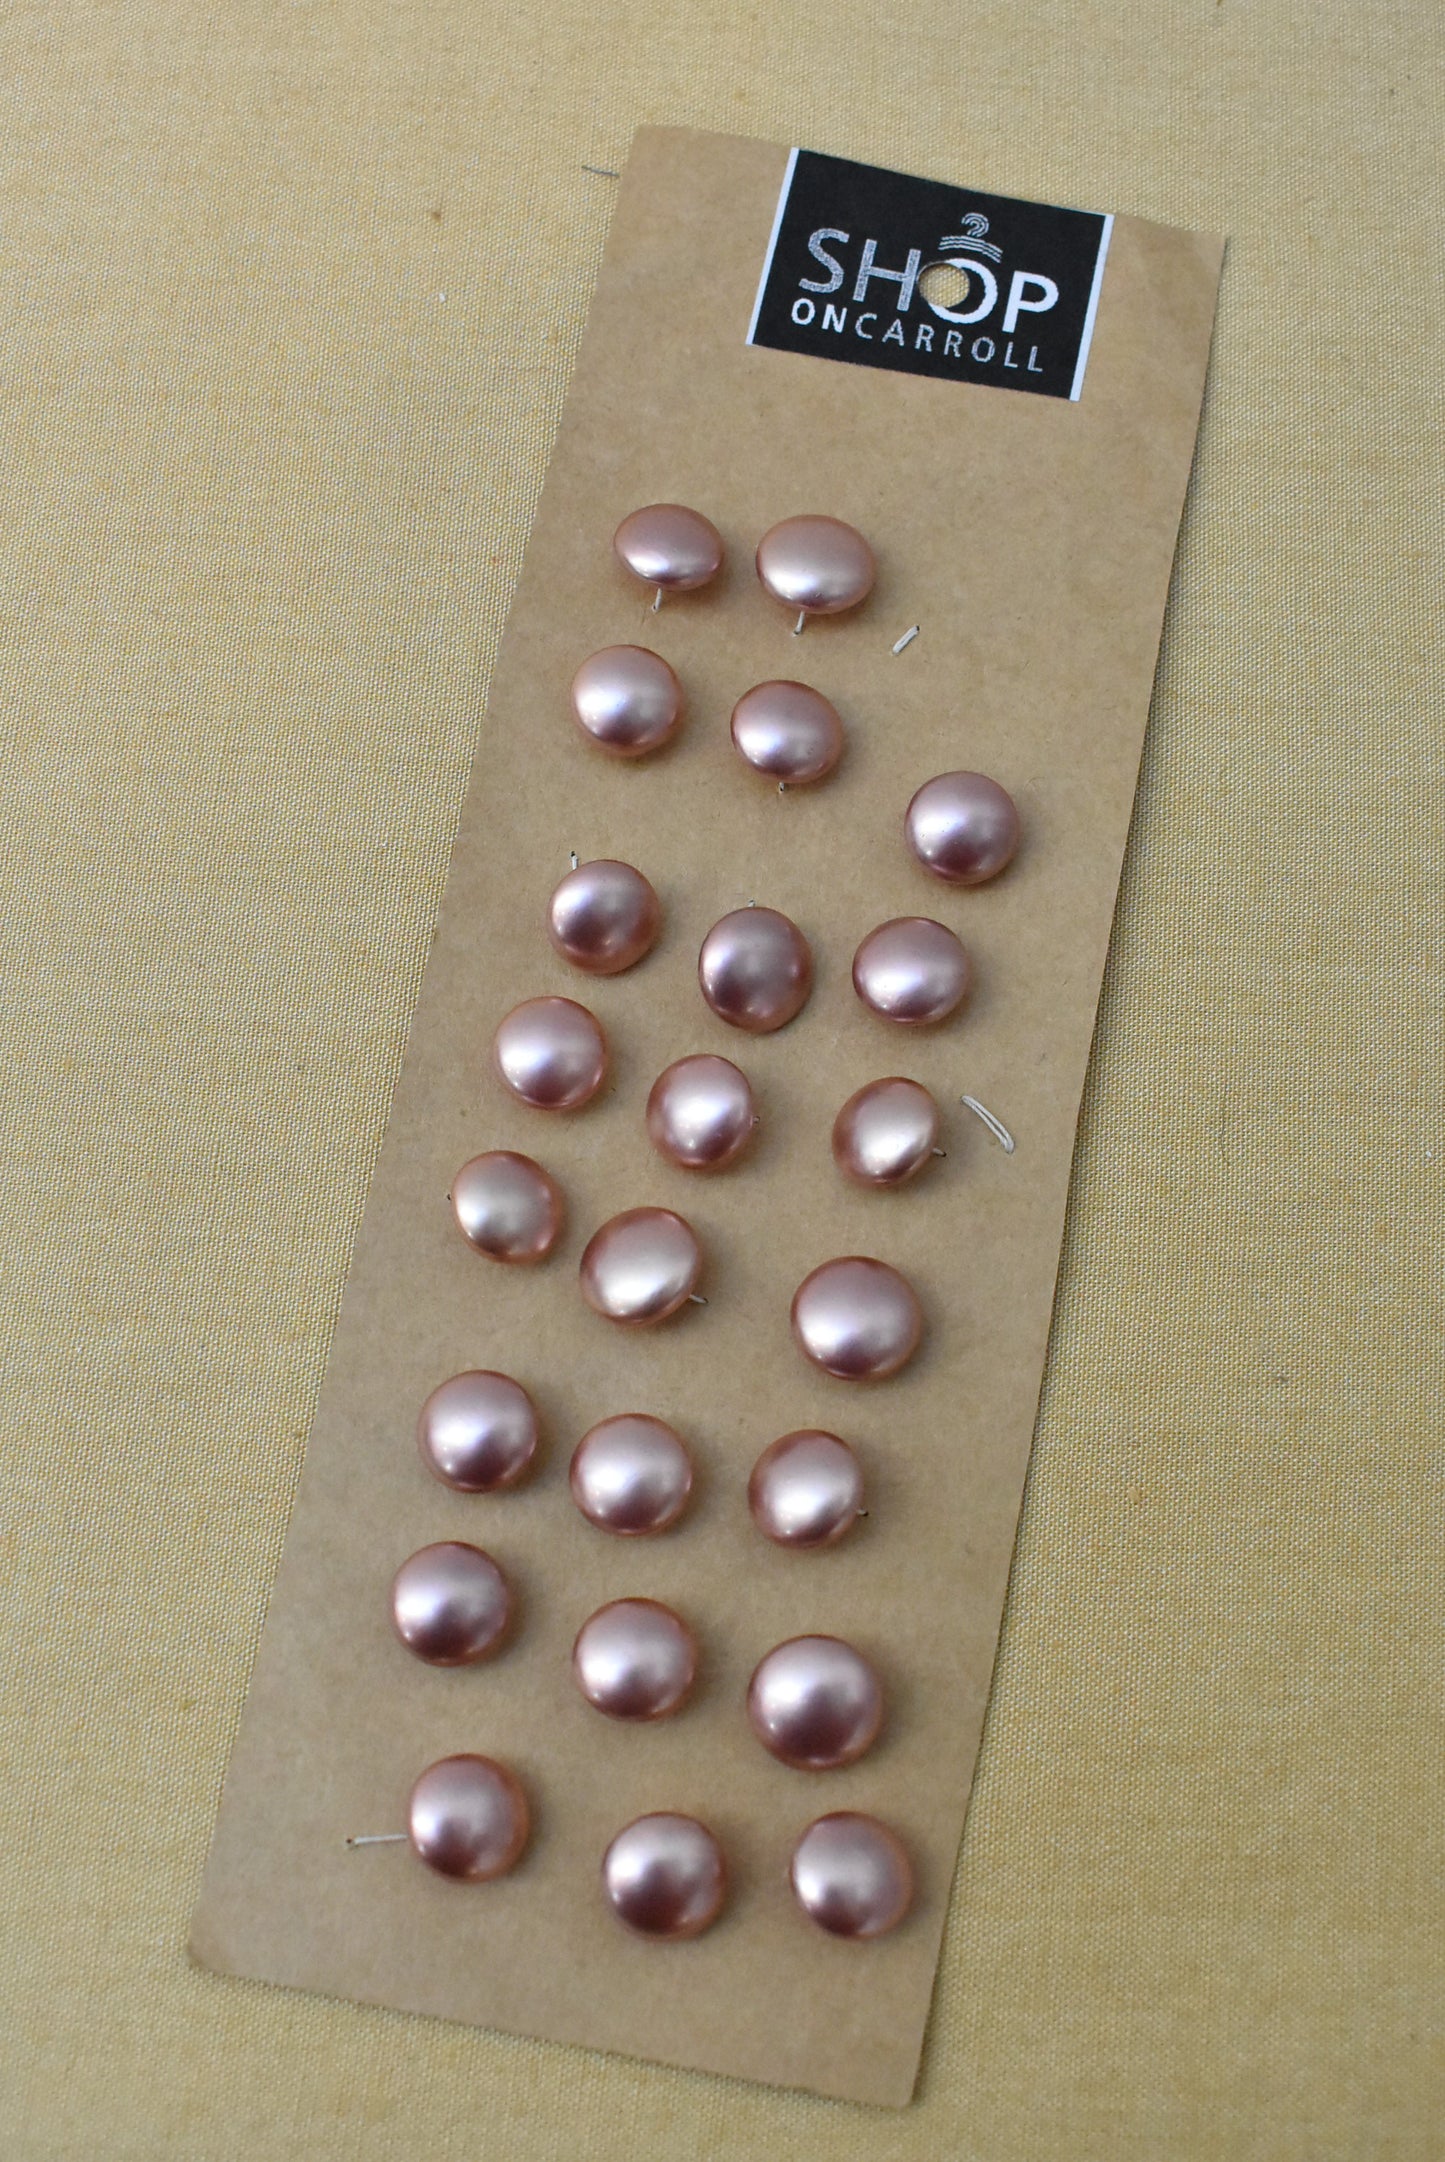 Vintage pink plastic buttons